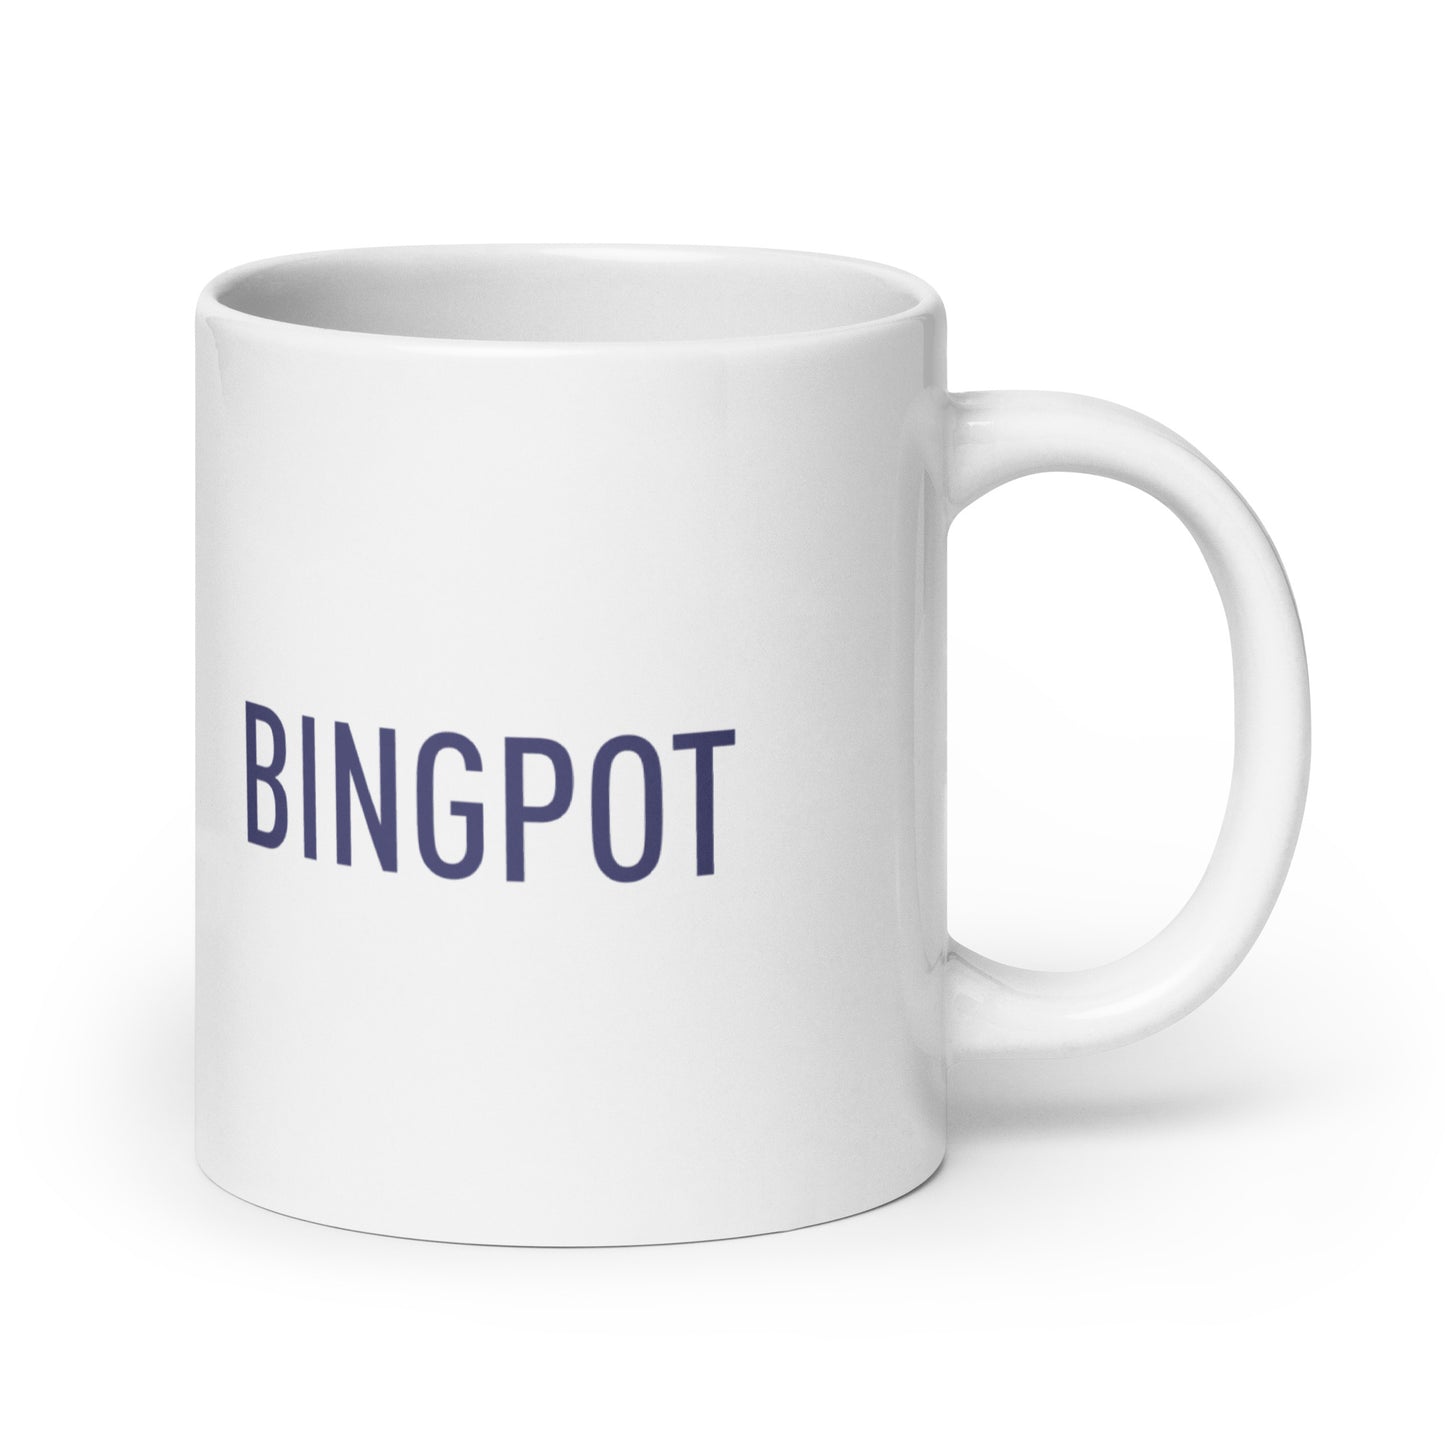 Bingpot White glossy mug